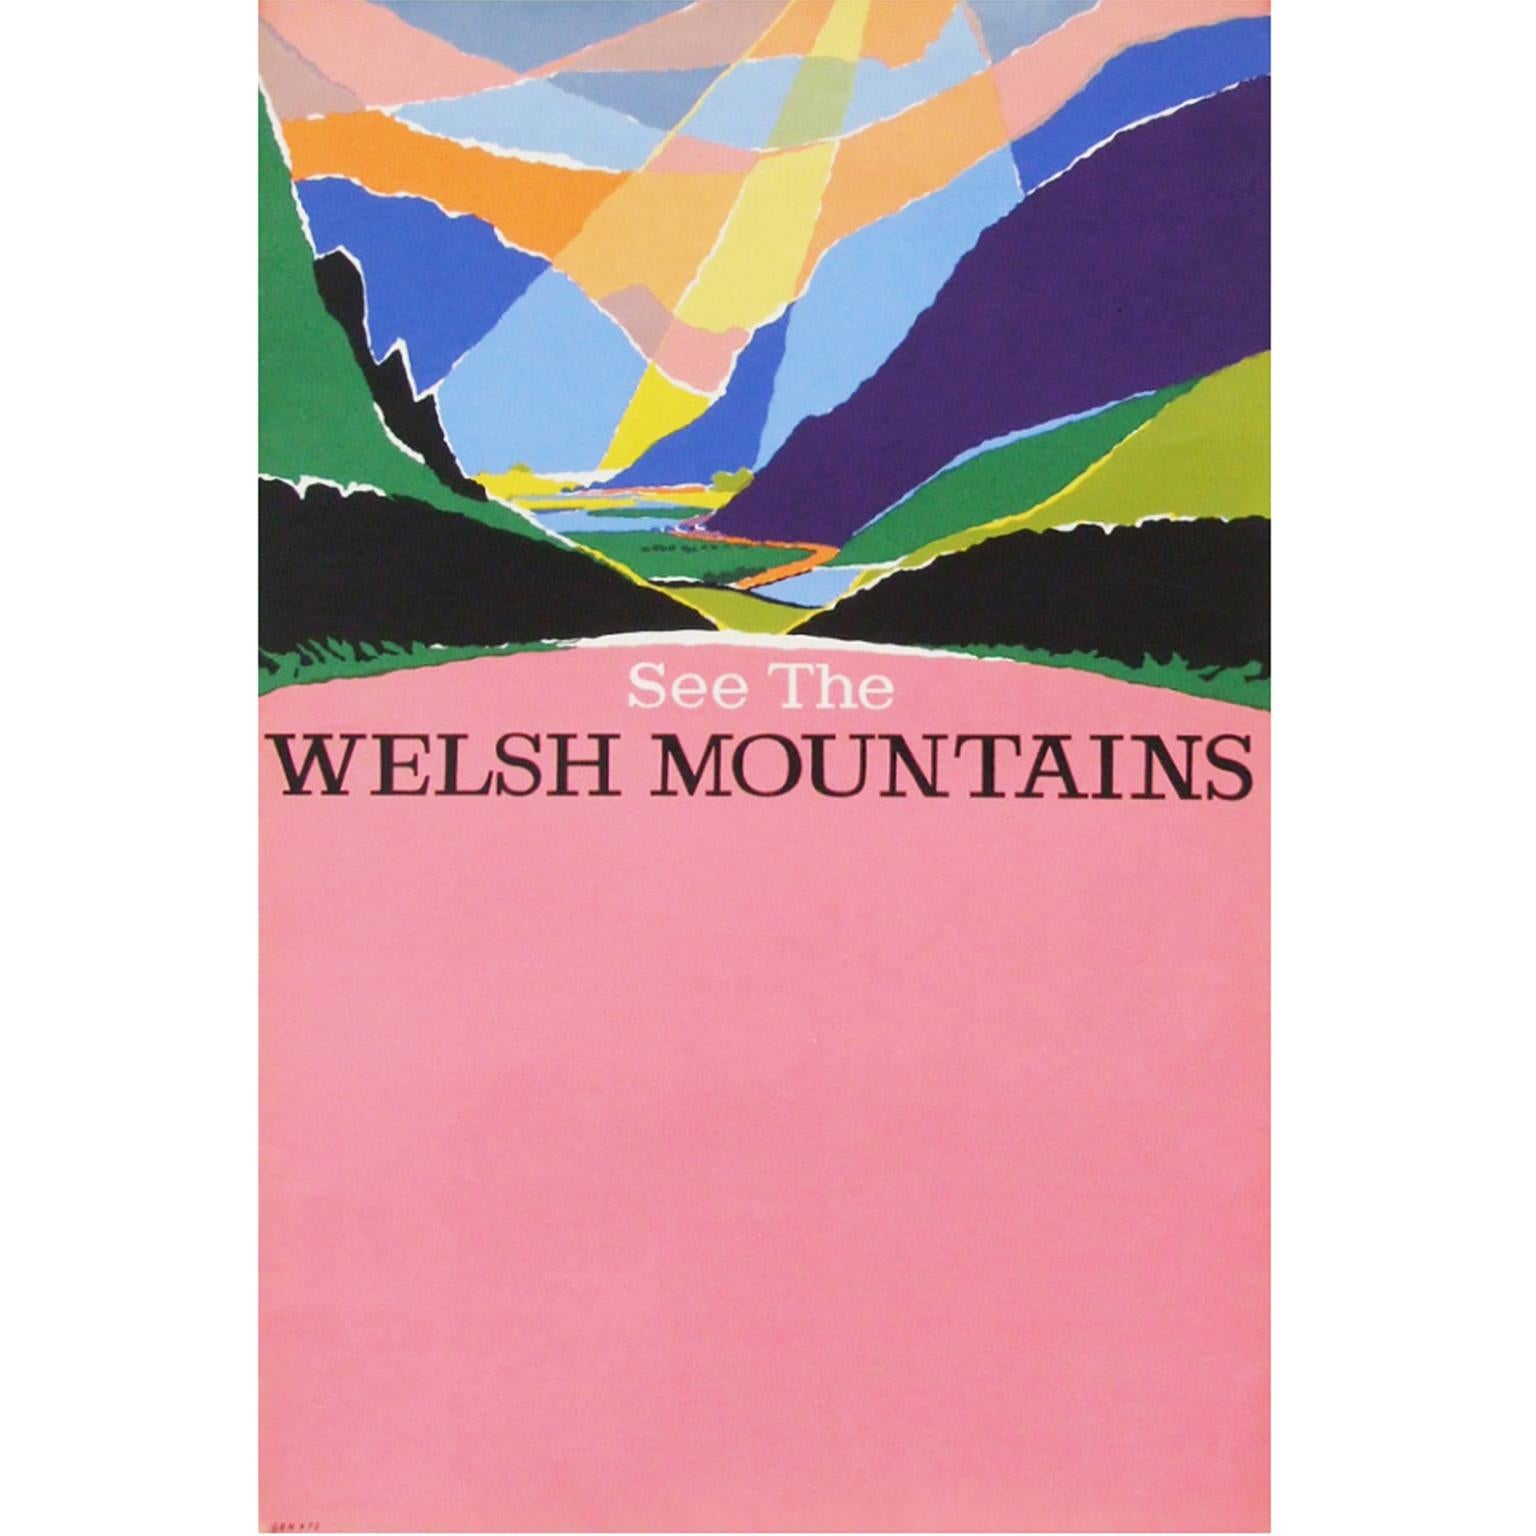 English 1960s British Transport Welsh Mountains Travel Poster Wales Landscape Art Pink